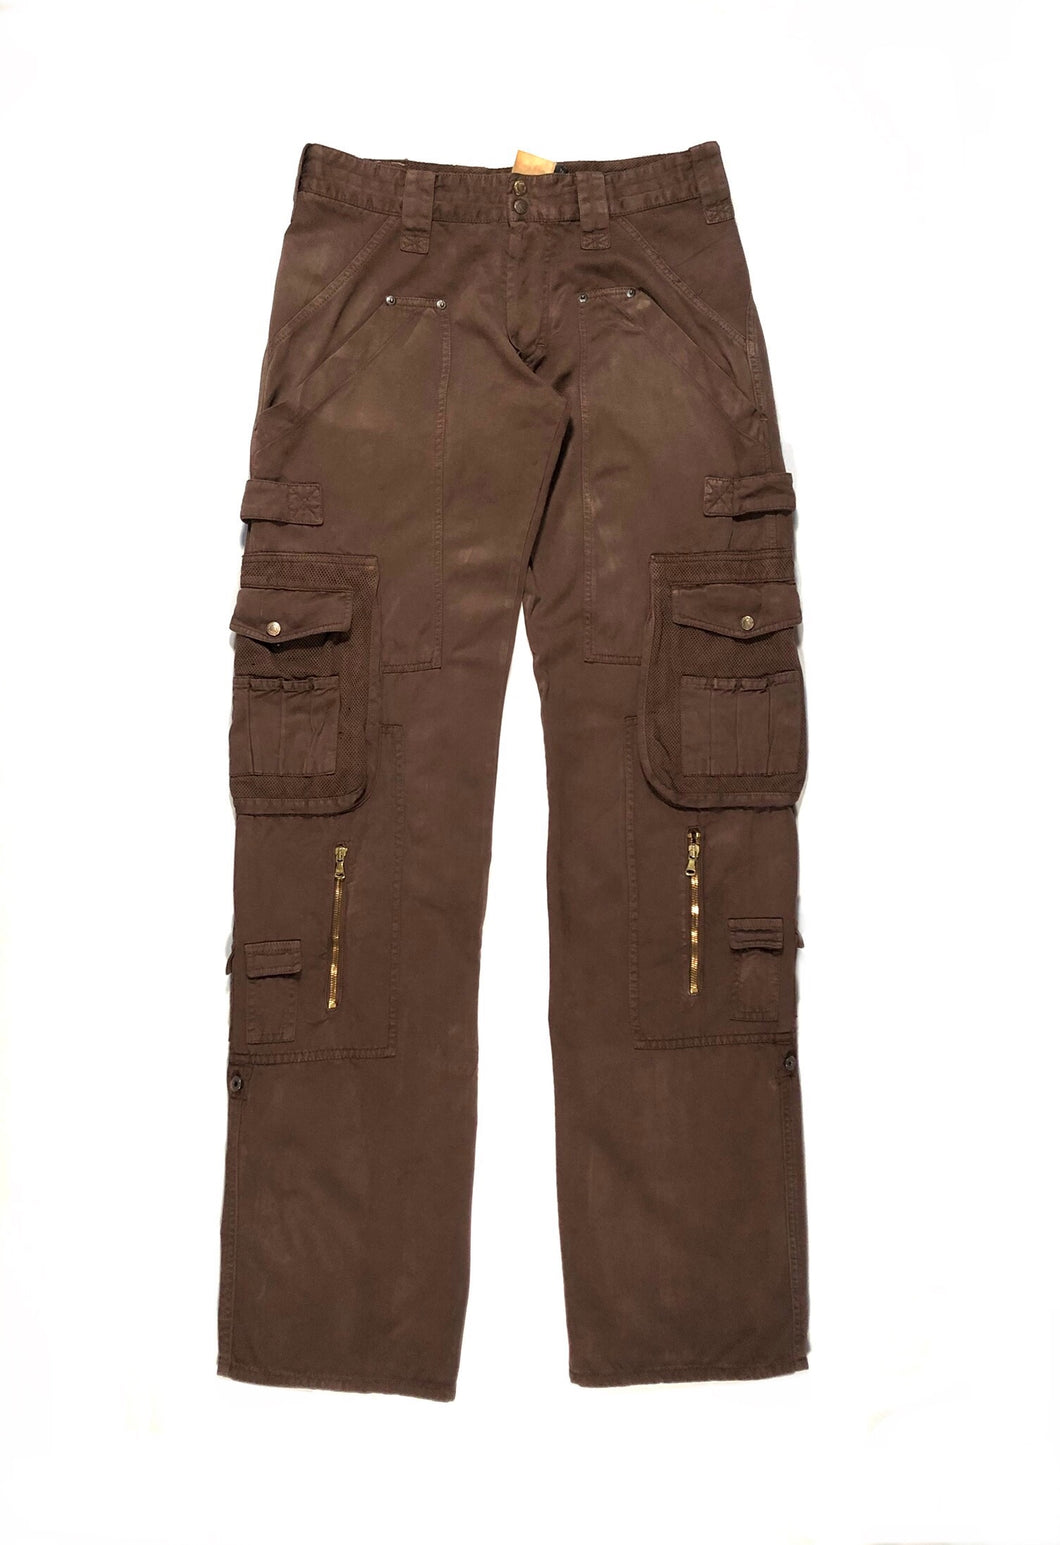 SS2003 Dolce & Gabbana 20 pockets adjustable cargo pants